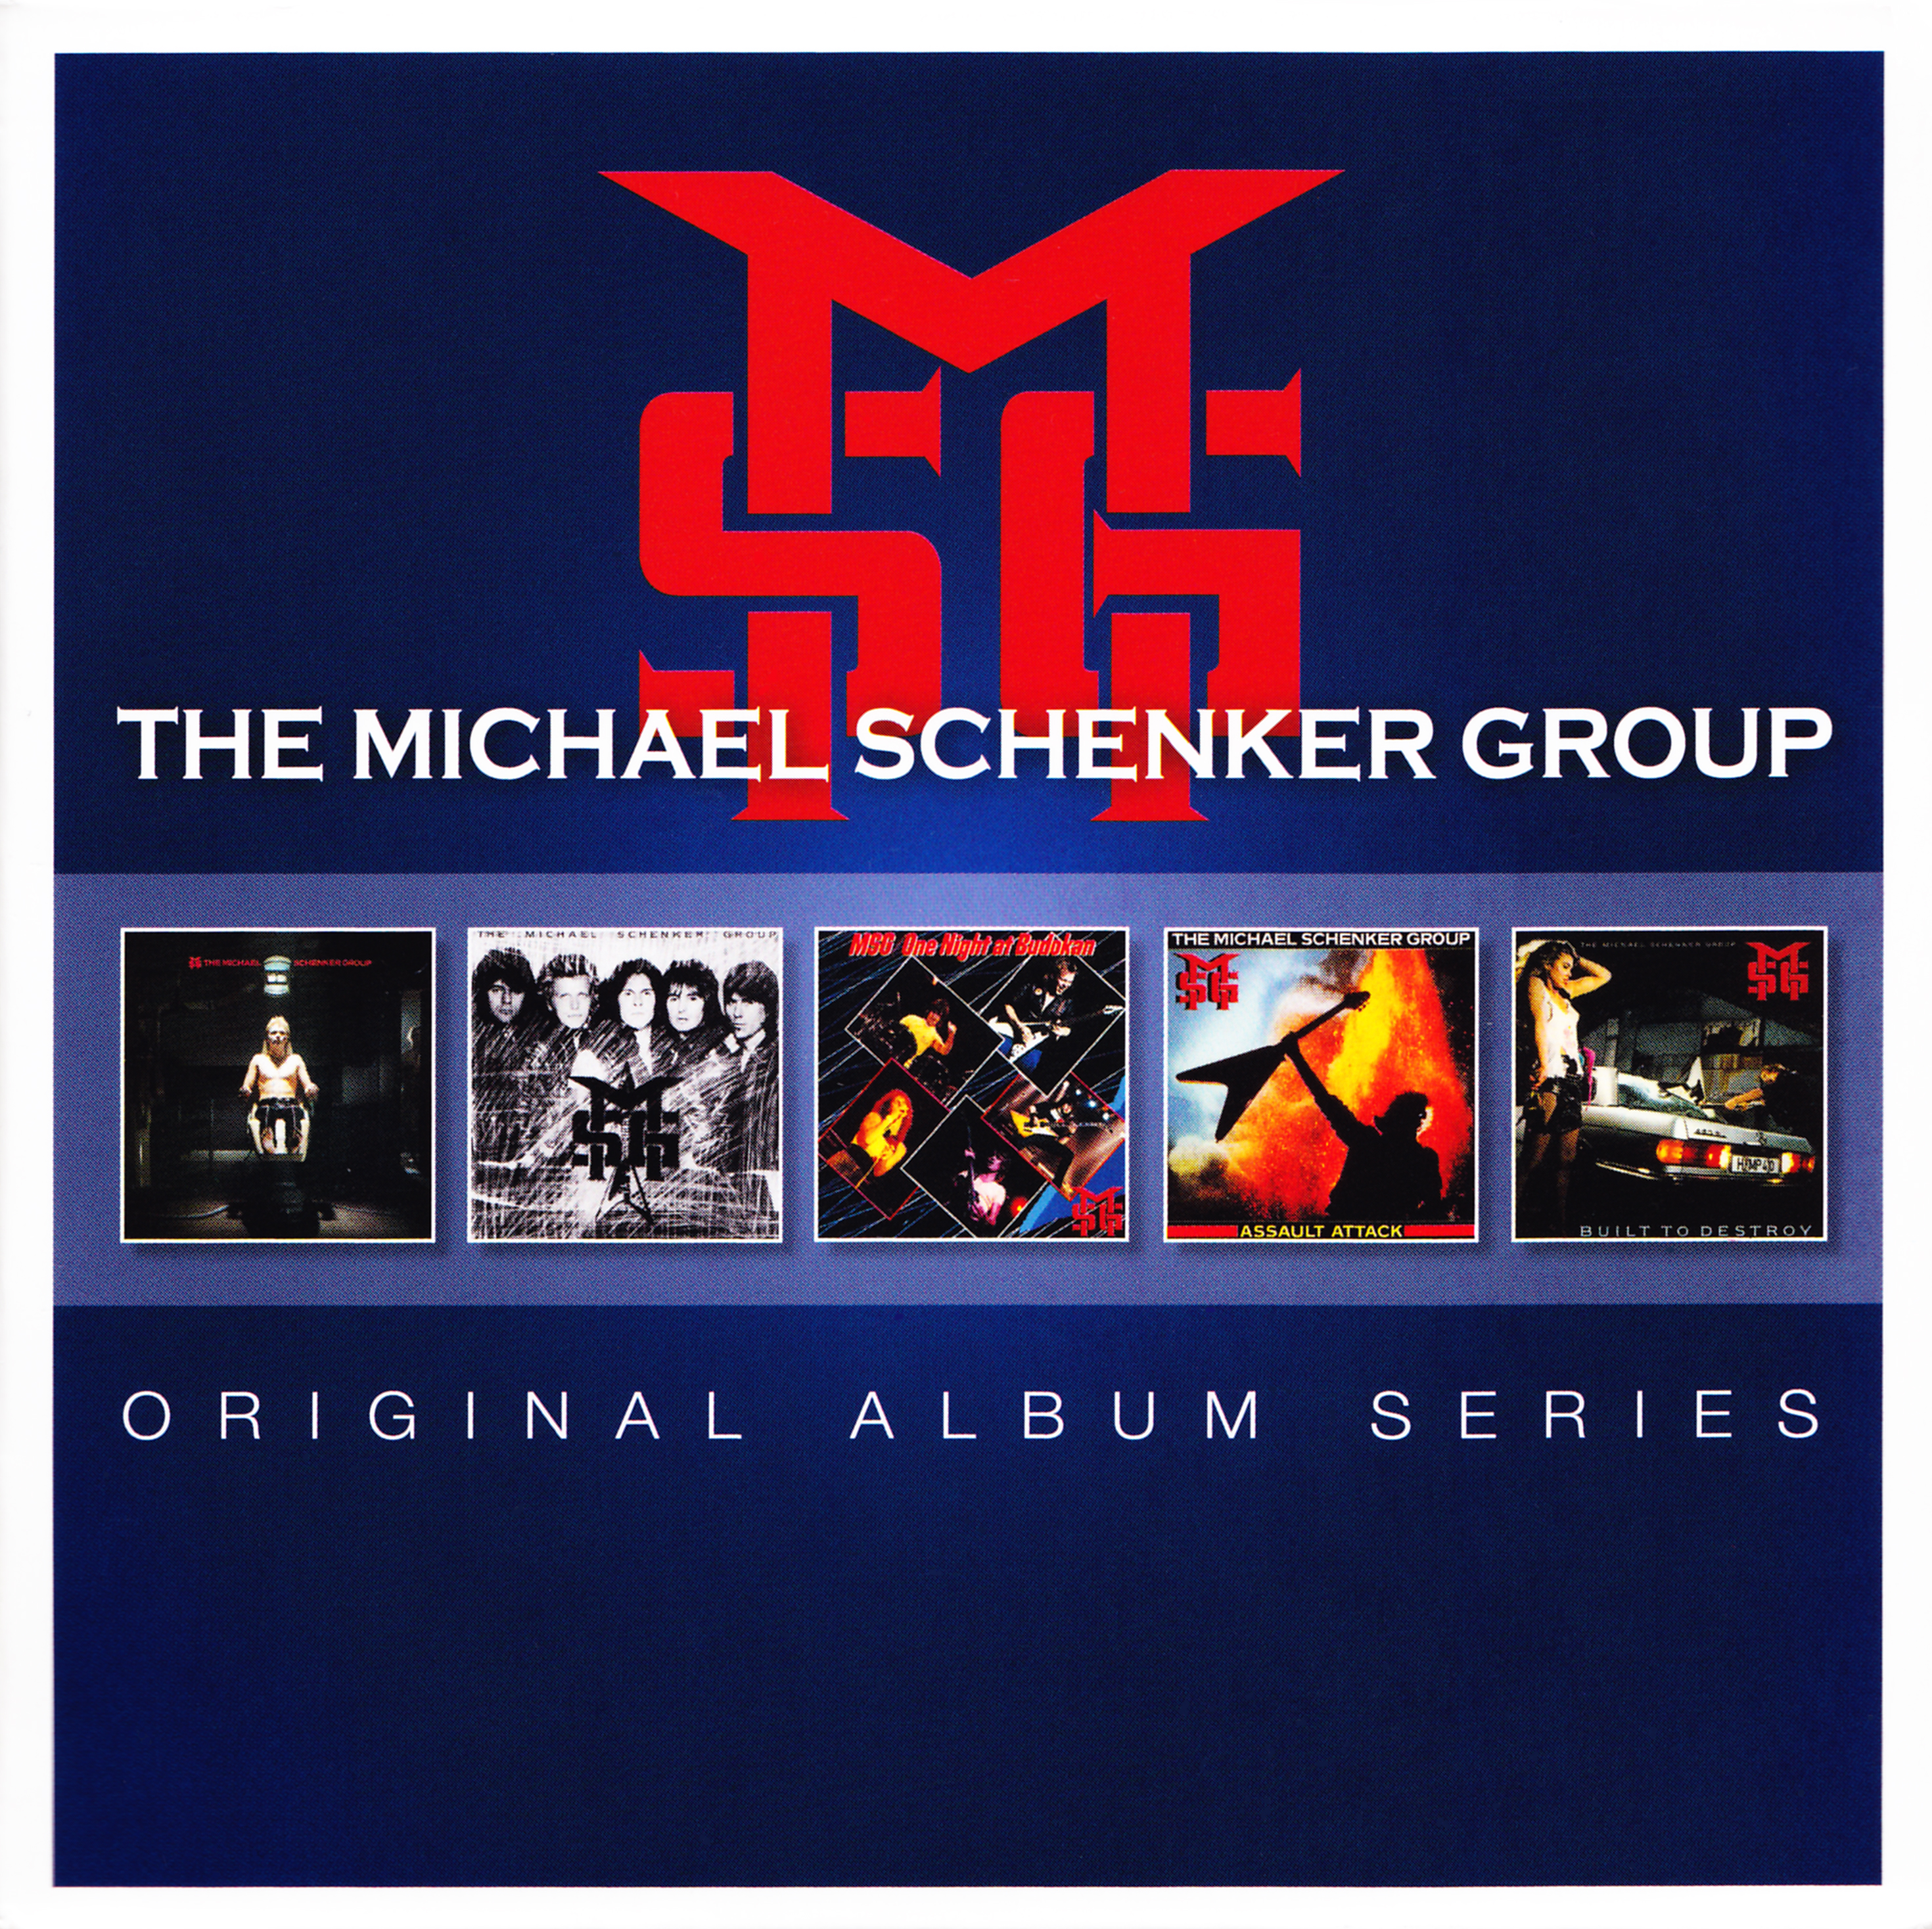 Release “Original Album Series” by Michael Schenker Group - Cover Art -  MusicBrainz